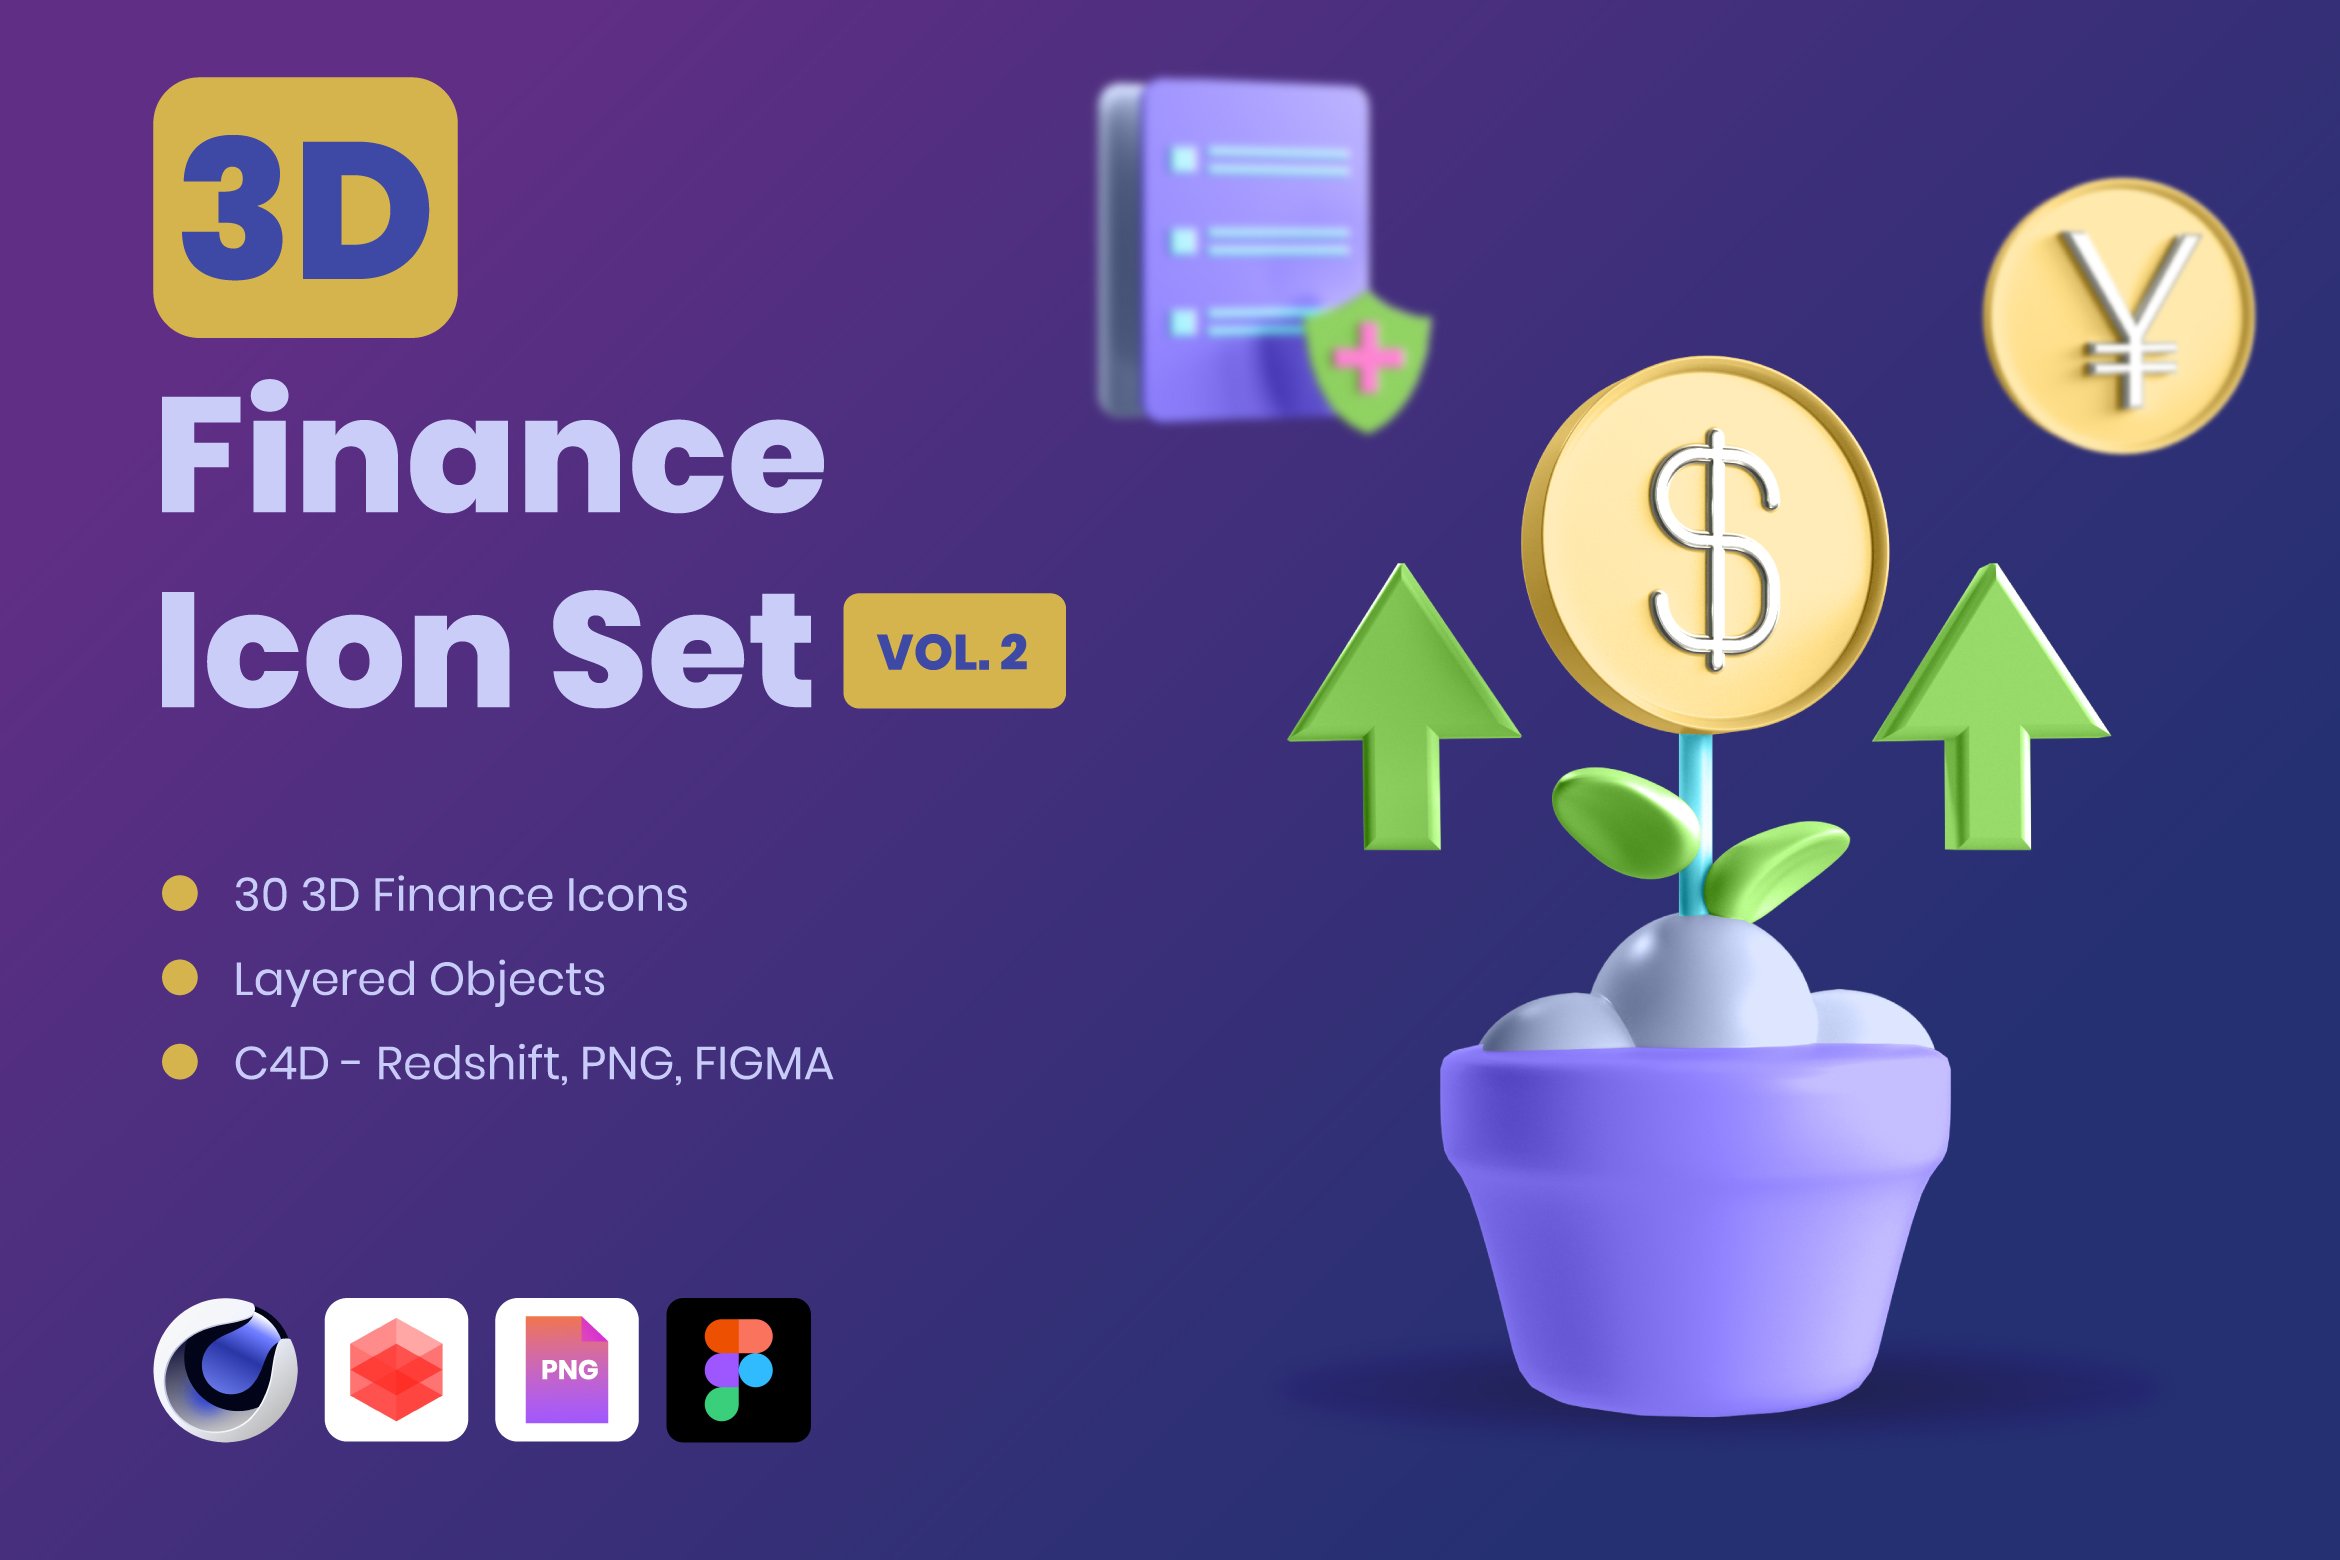 3D Finance Icon Set - Vol 2 cover image.